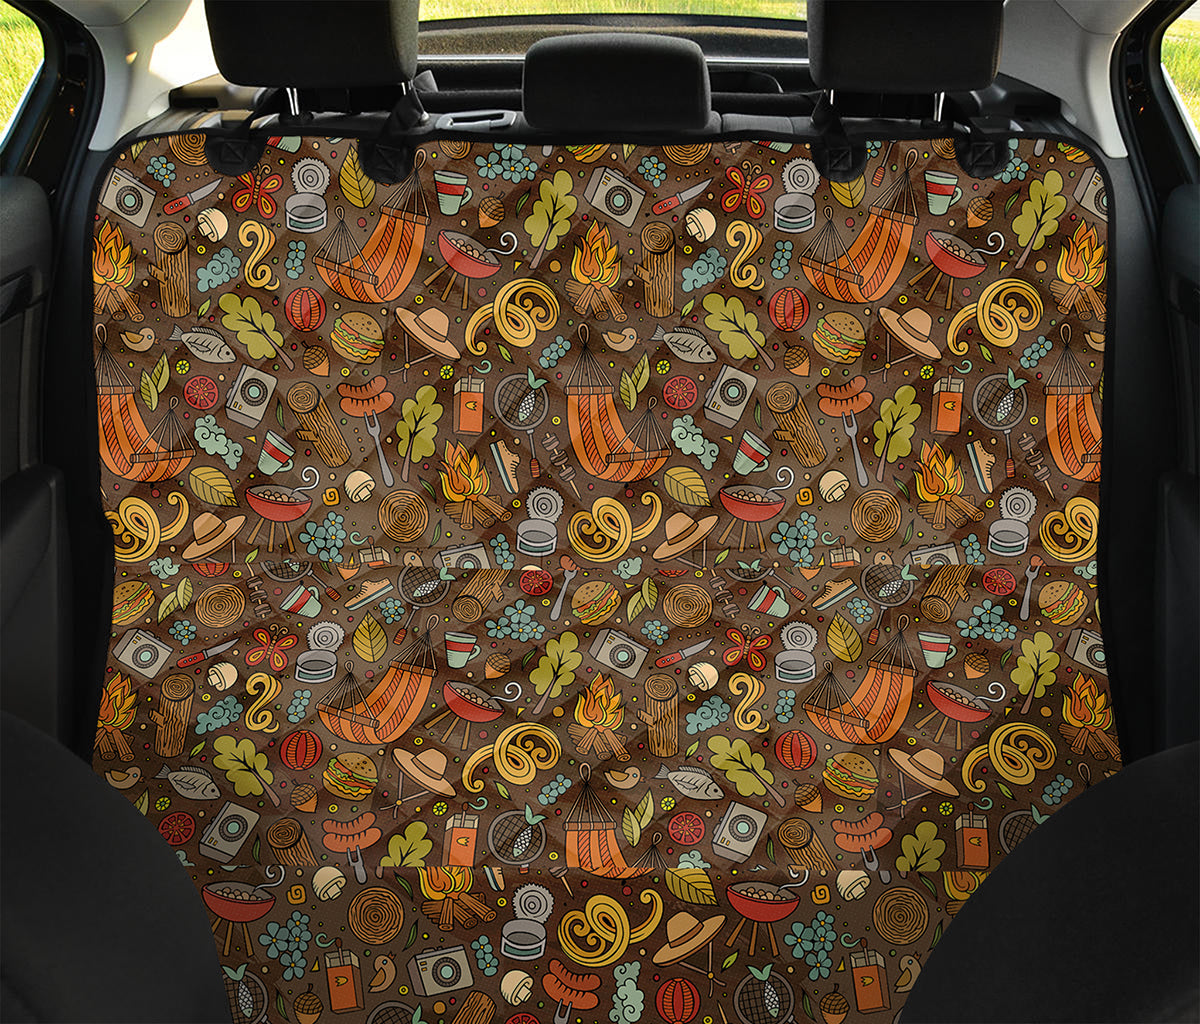 Cartoon Camping Pattern Print Pet Car Back Seat Cover